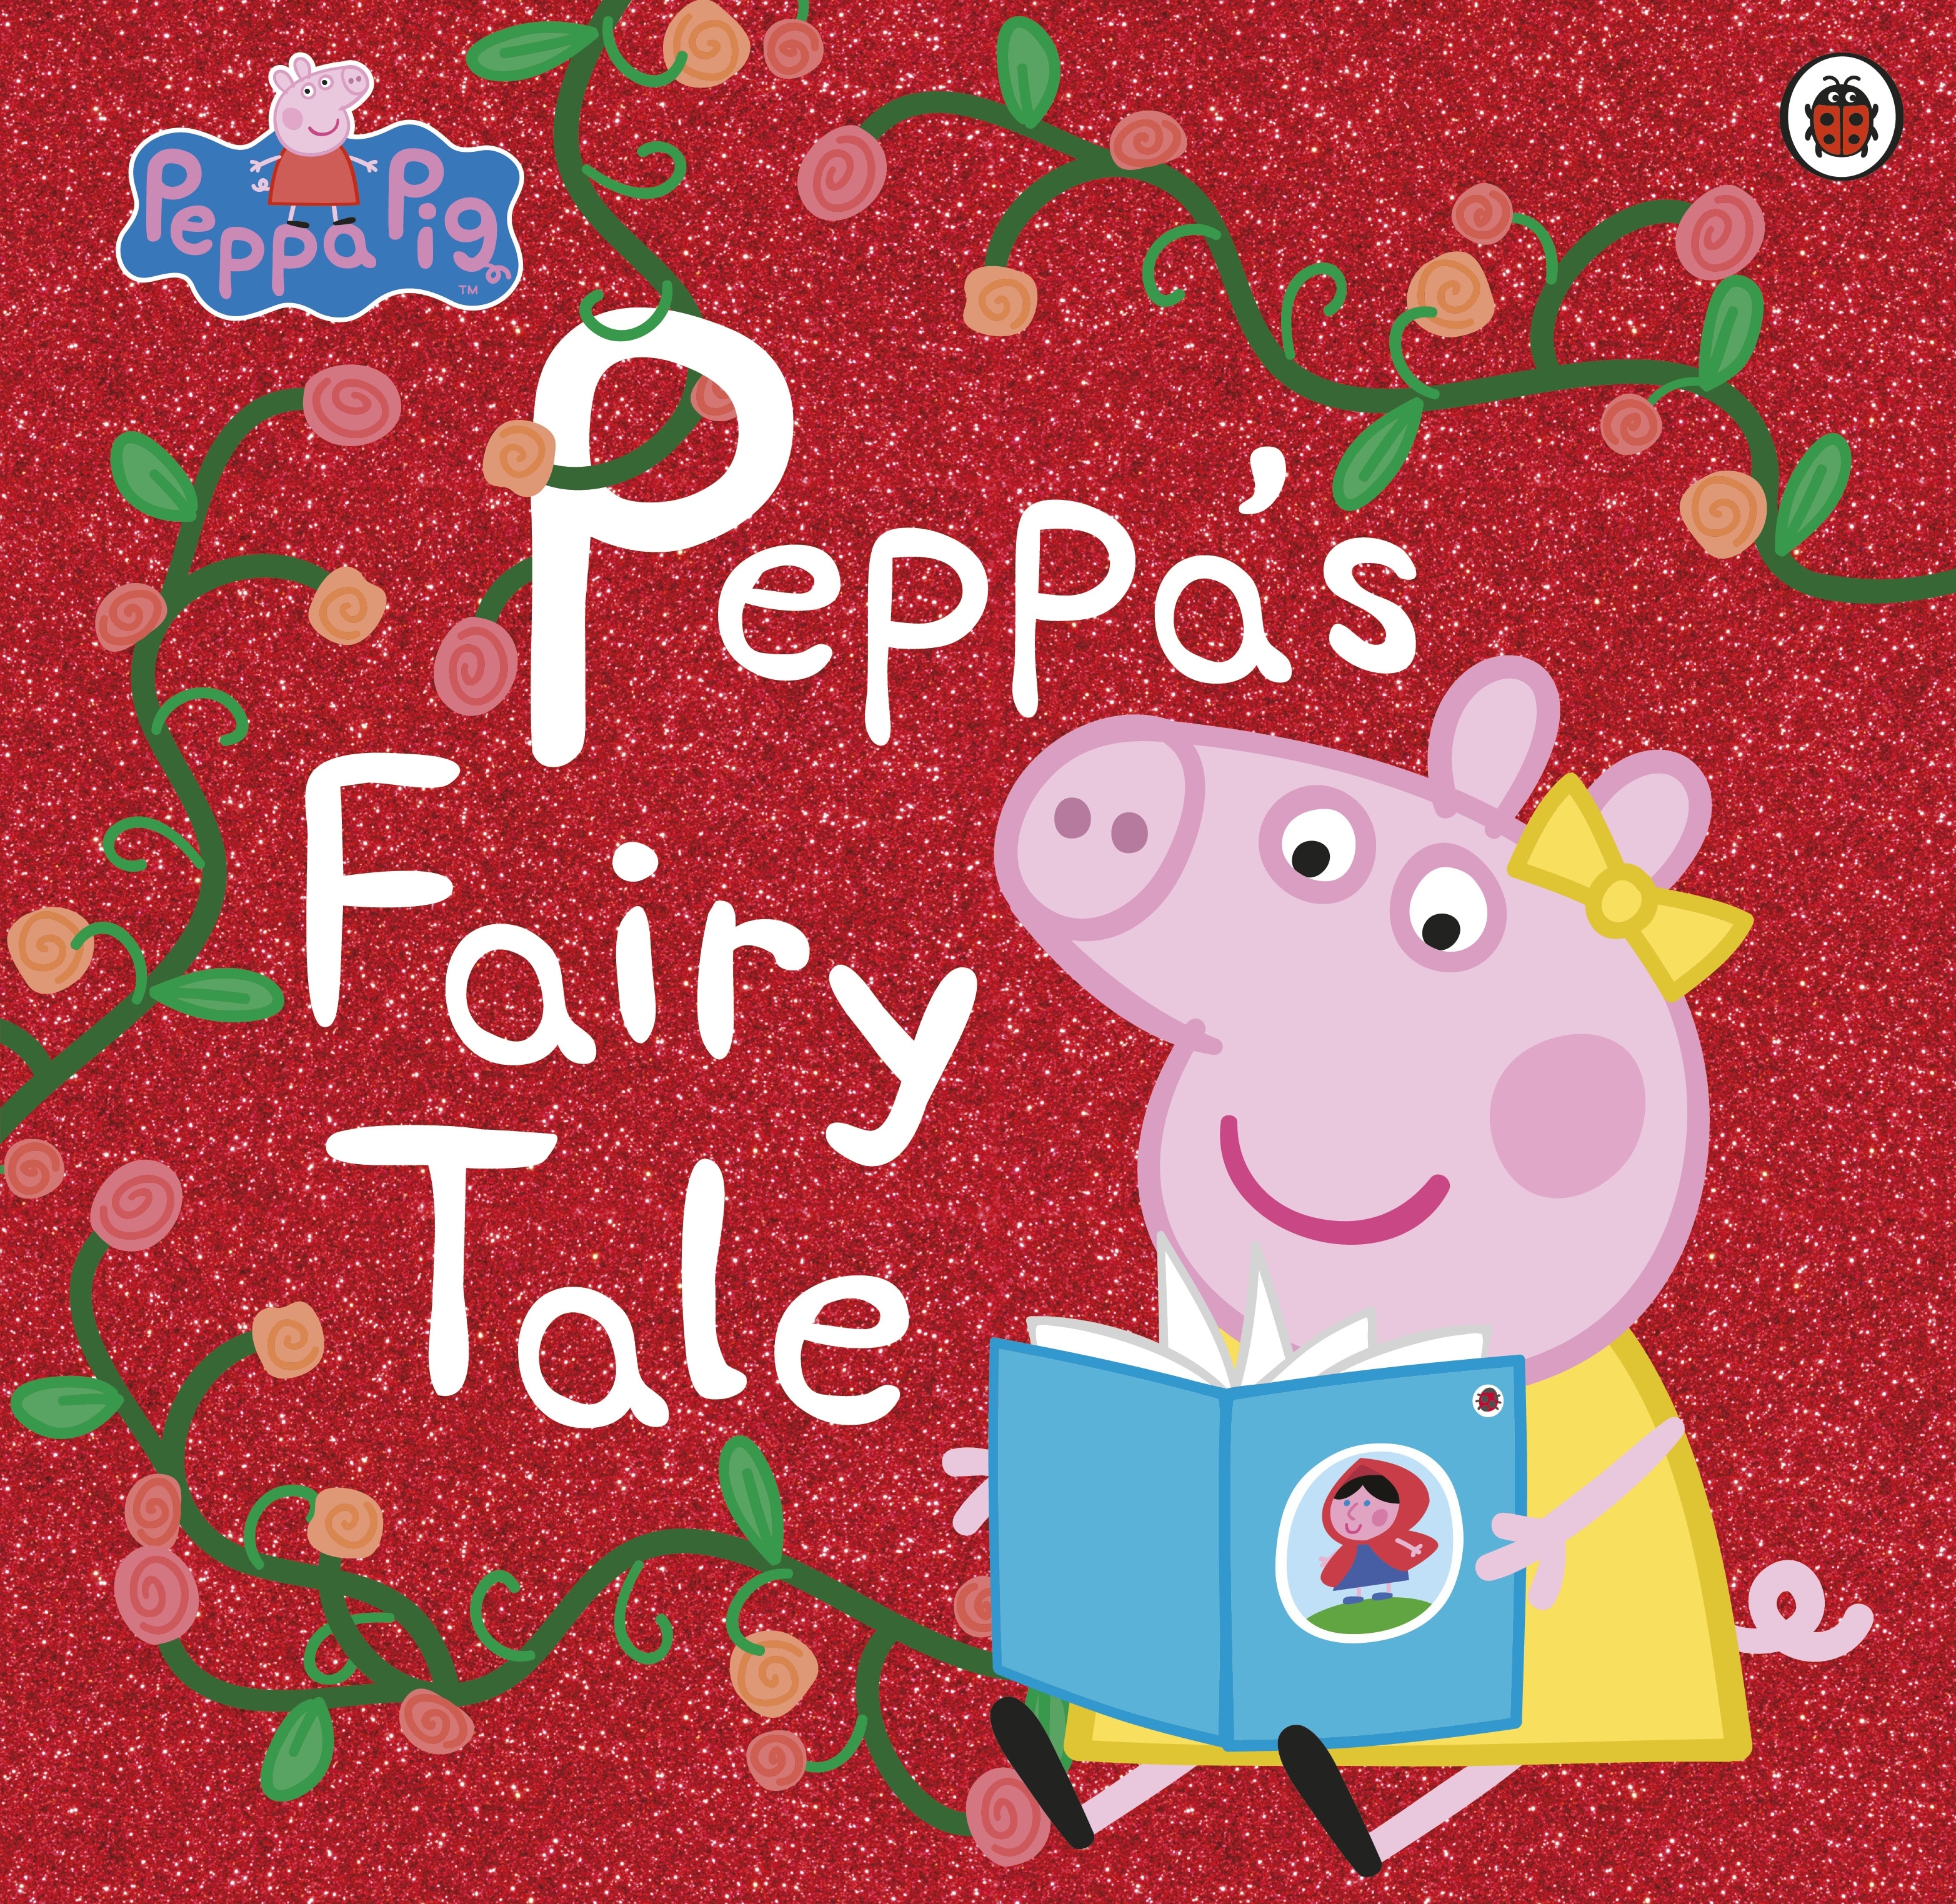 Book “Peppa Pig: Peppa’s Fairy Tale” by Peppa Pig — March 21, 2019